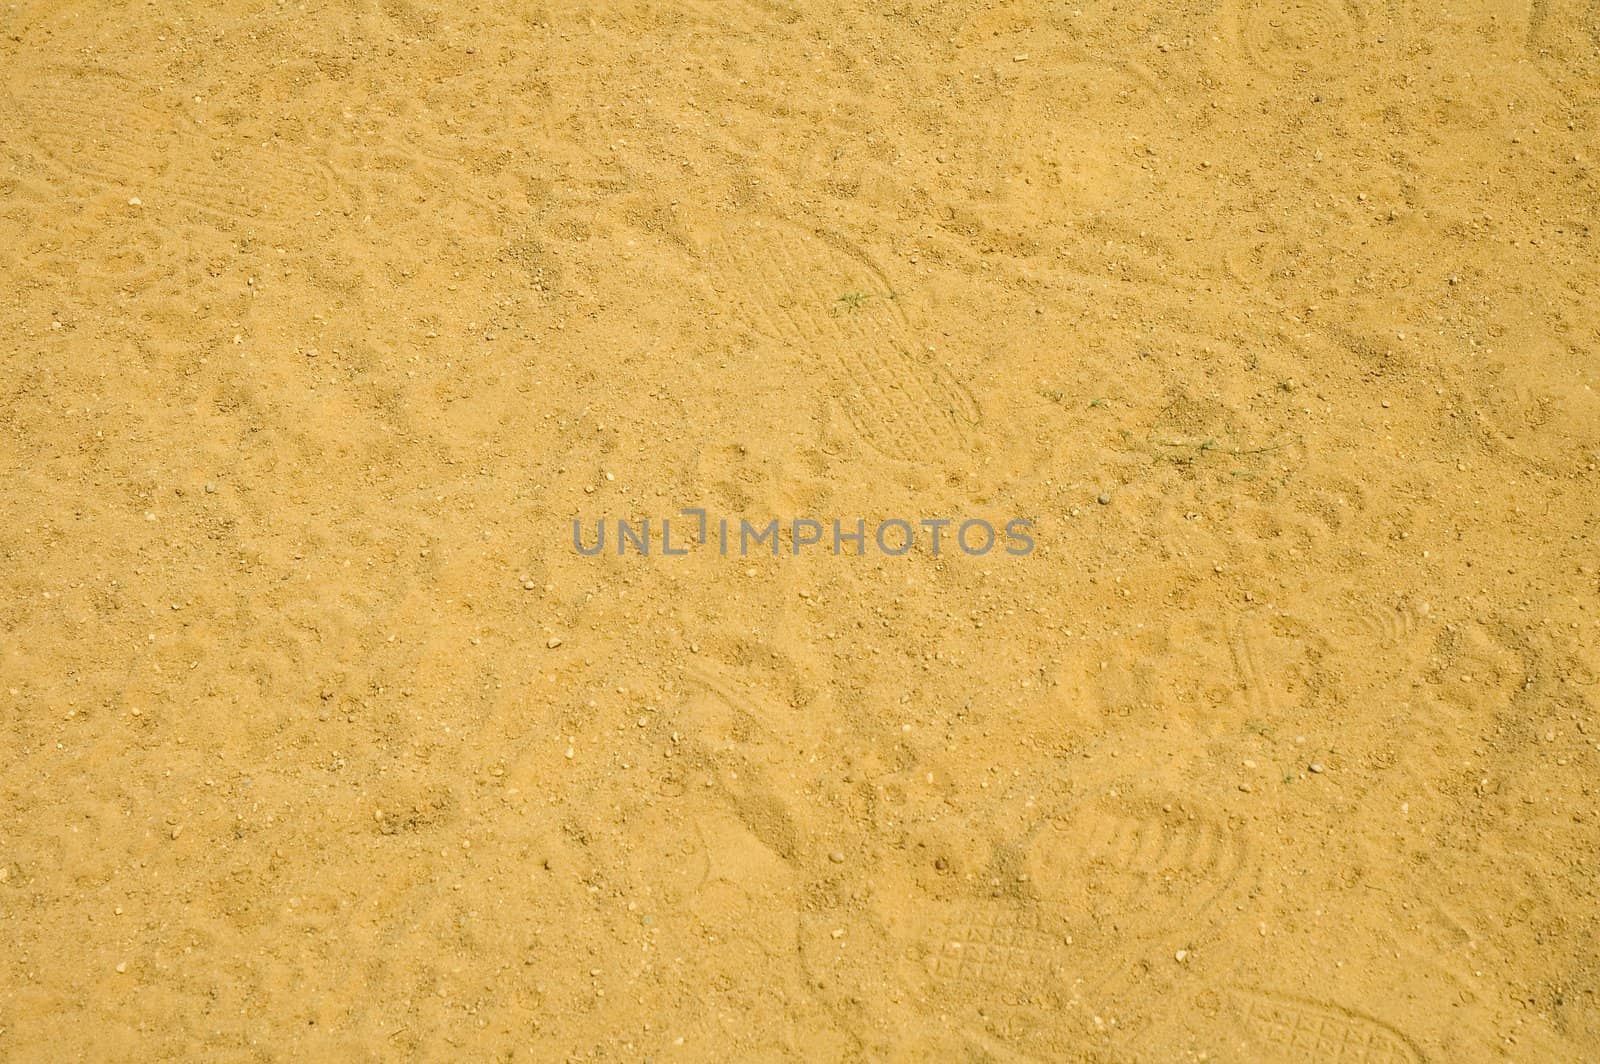 baseball field, several players footprints 